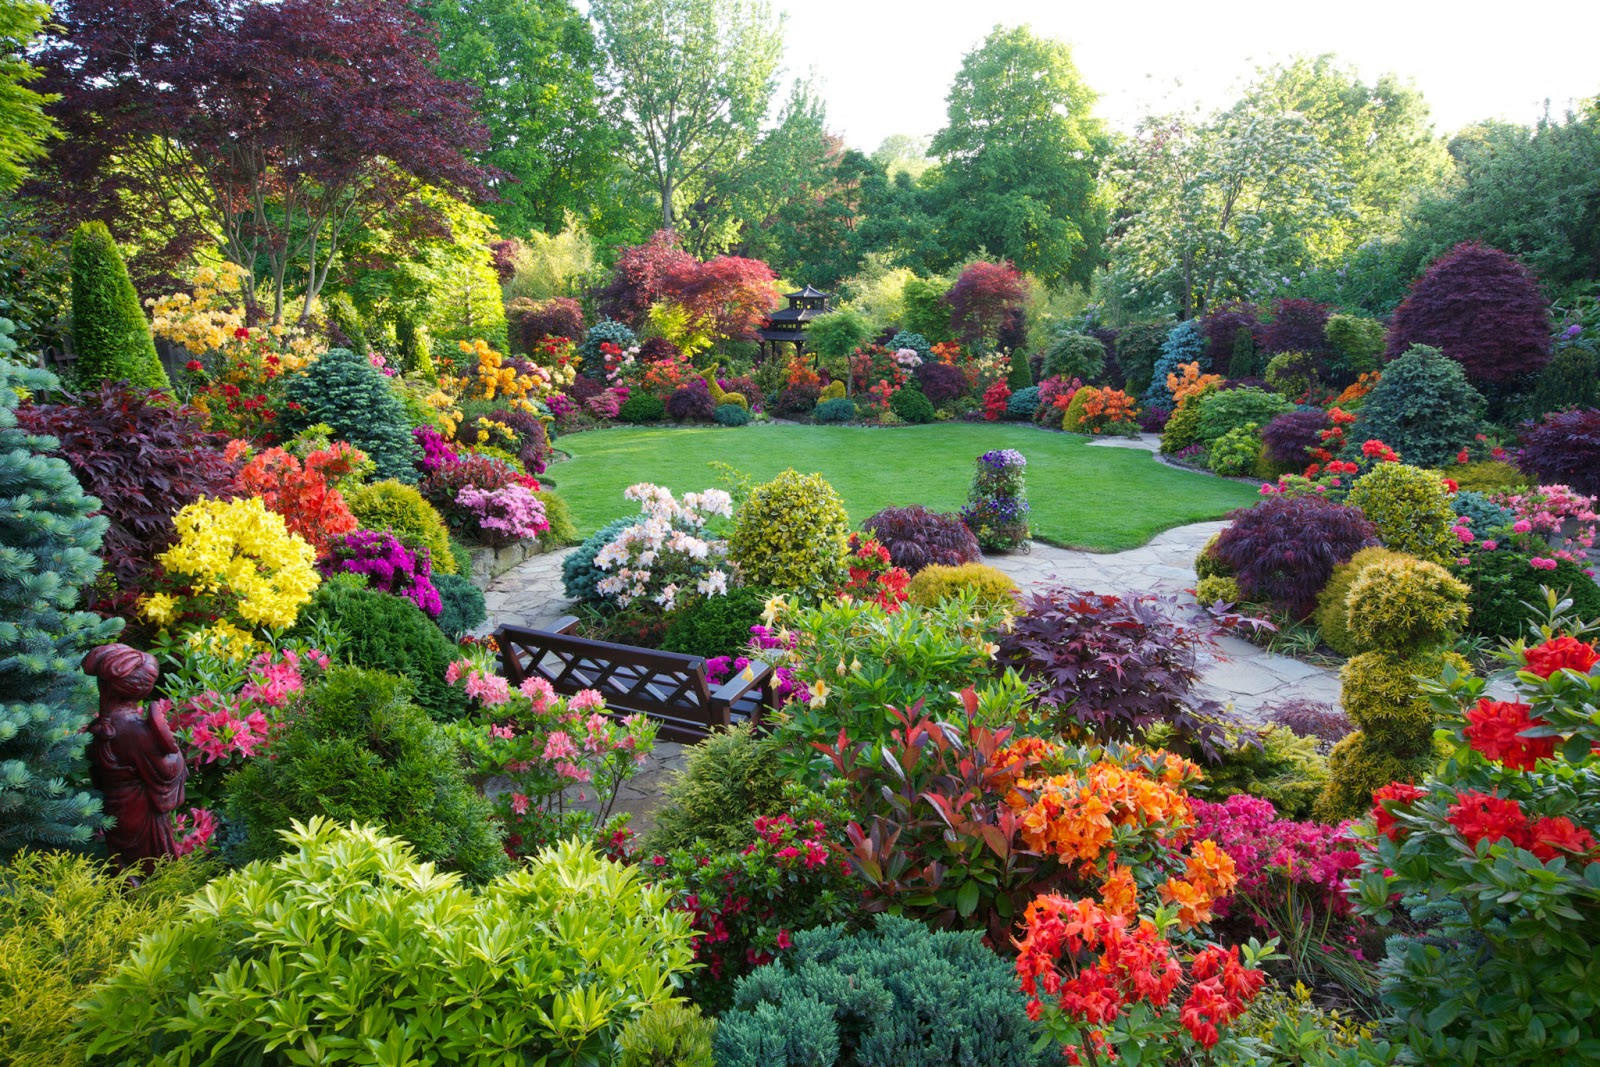 Drelis Gardens: Four Seasons Garden - The most beautiful home gardens